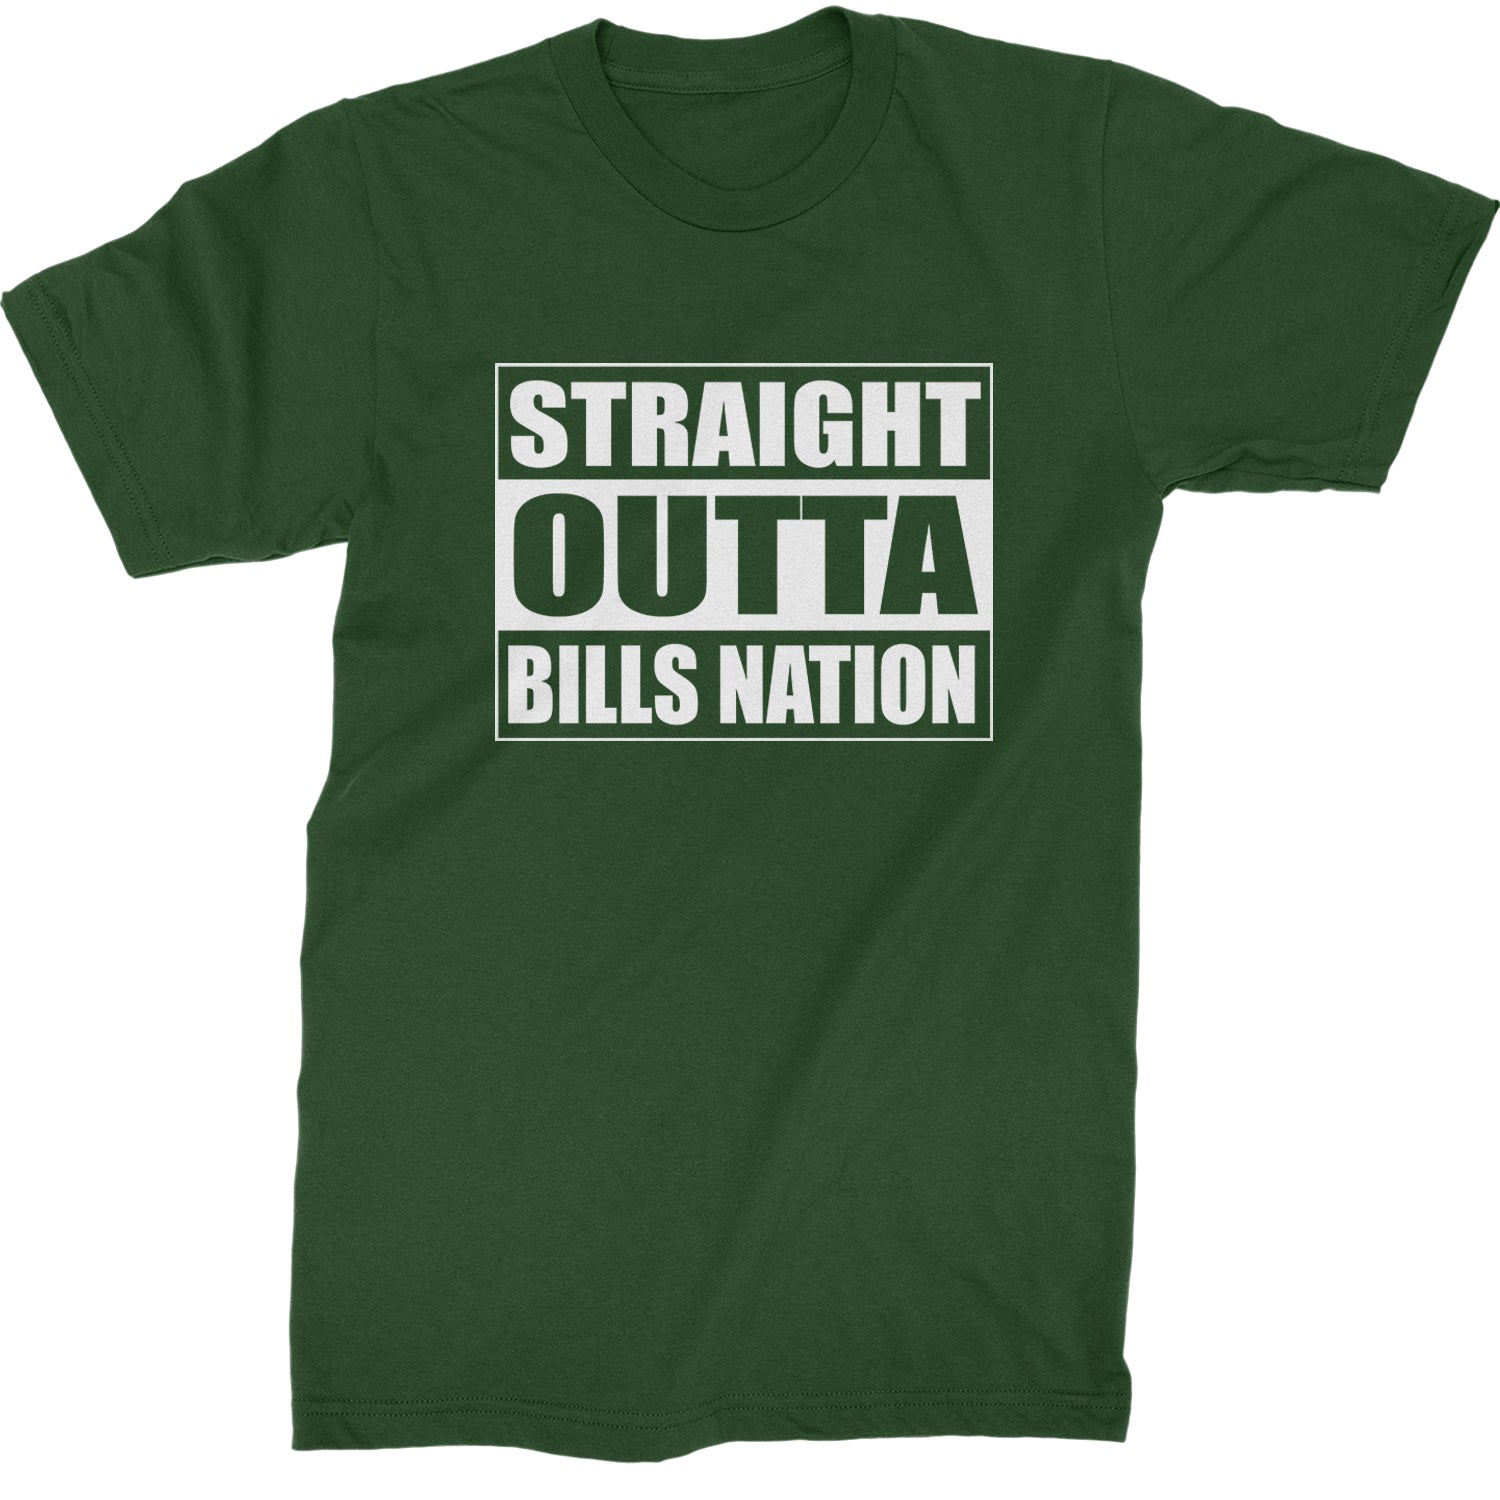 Straight Outta Bills Nation  Mens T-shirt Forest Green